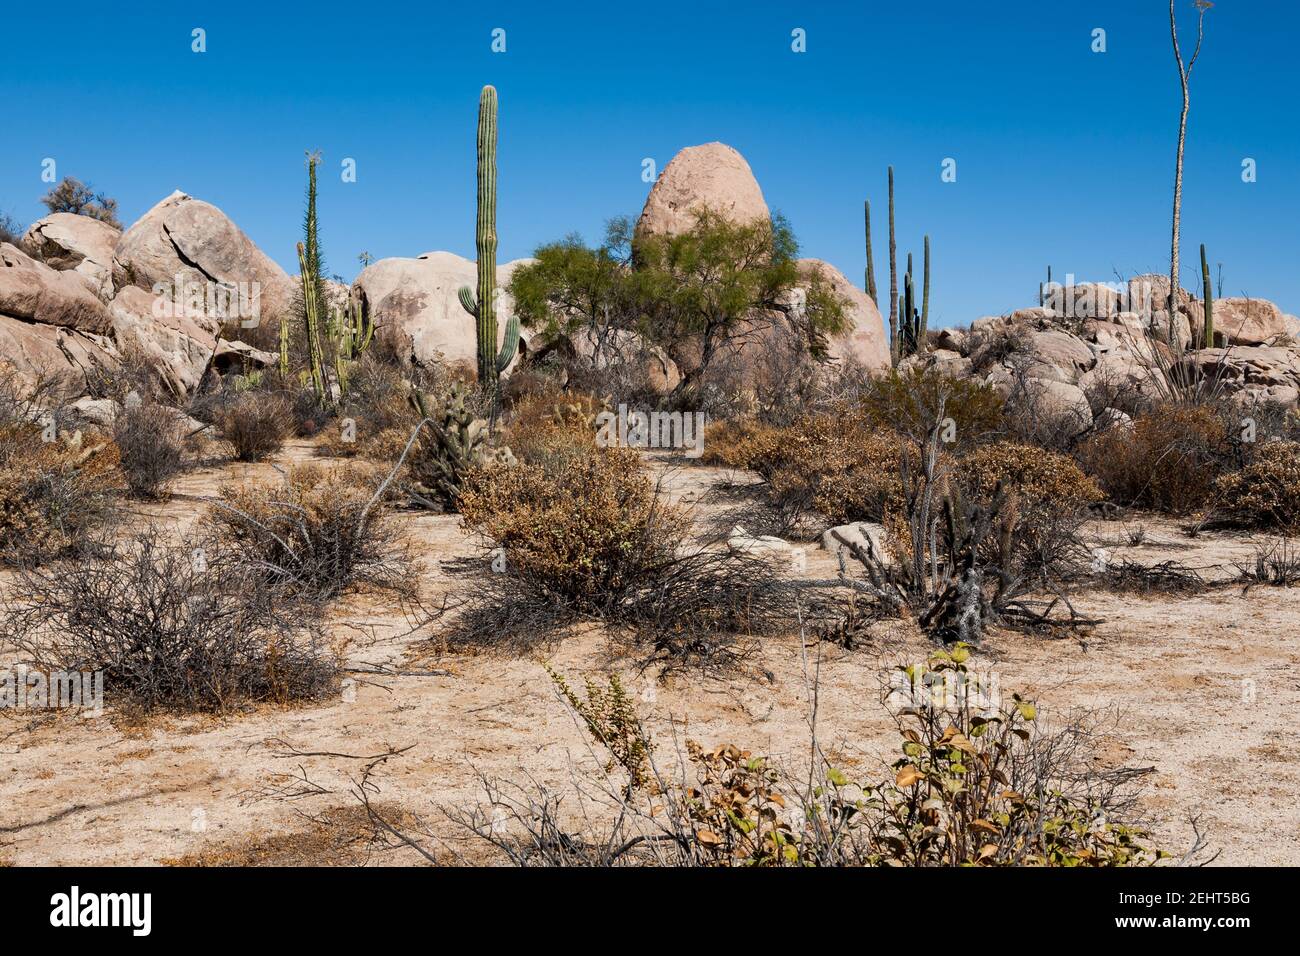 Cardon o cactus elefante Pachycereus pringlei vicino ad una roccia in Baja California, Messico Foto Stock